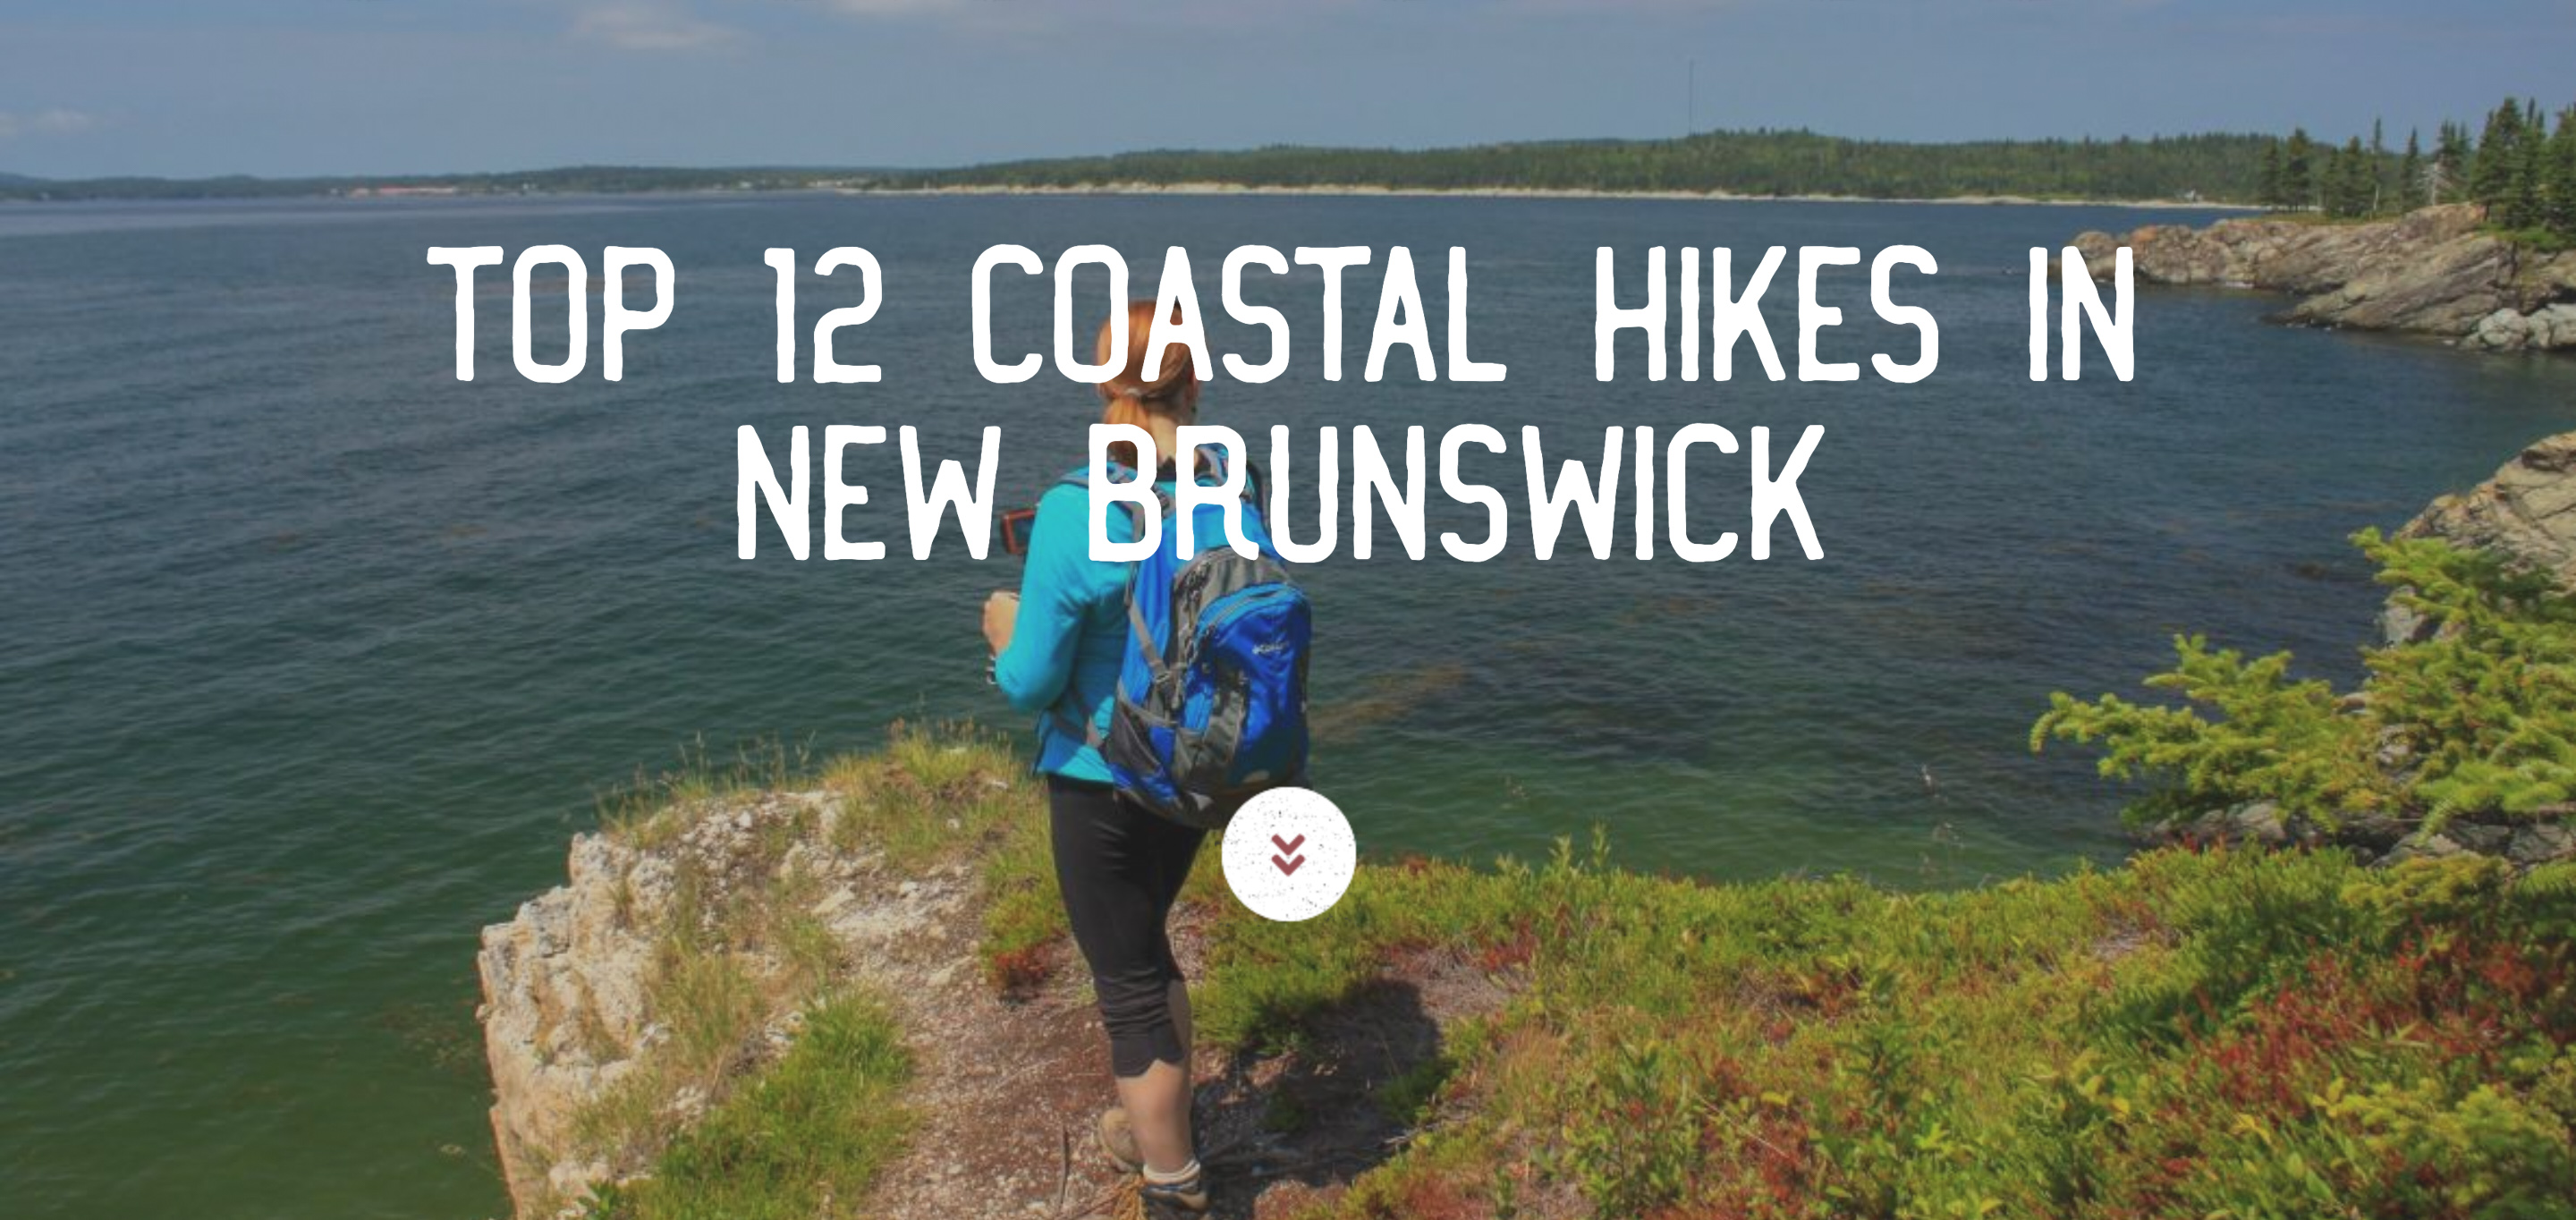 Top 12 Coastal Hikes Blog Post